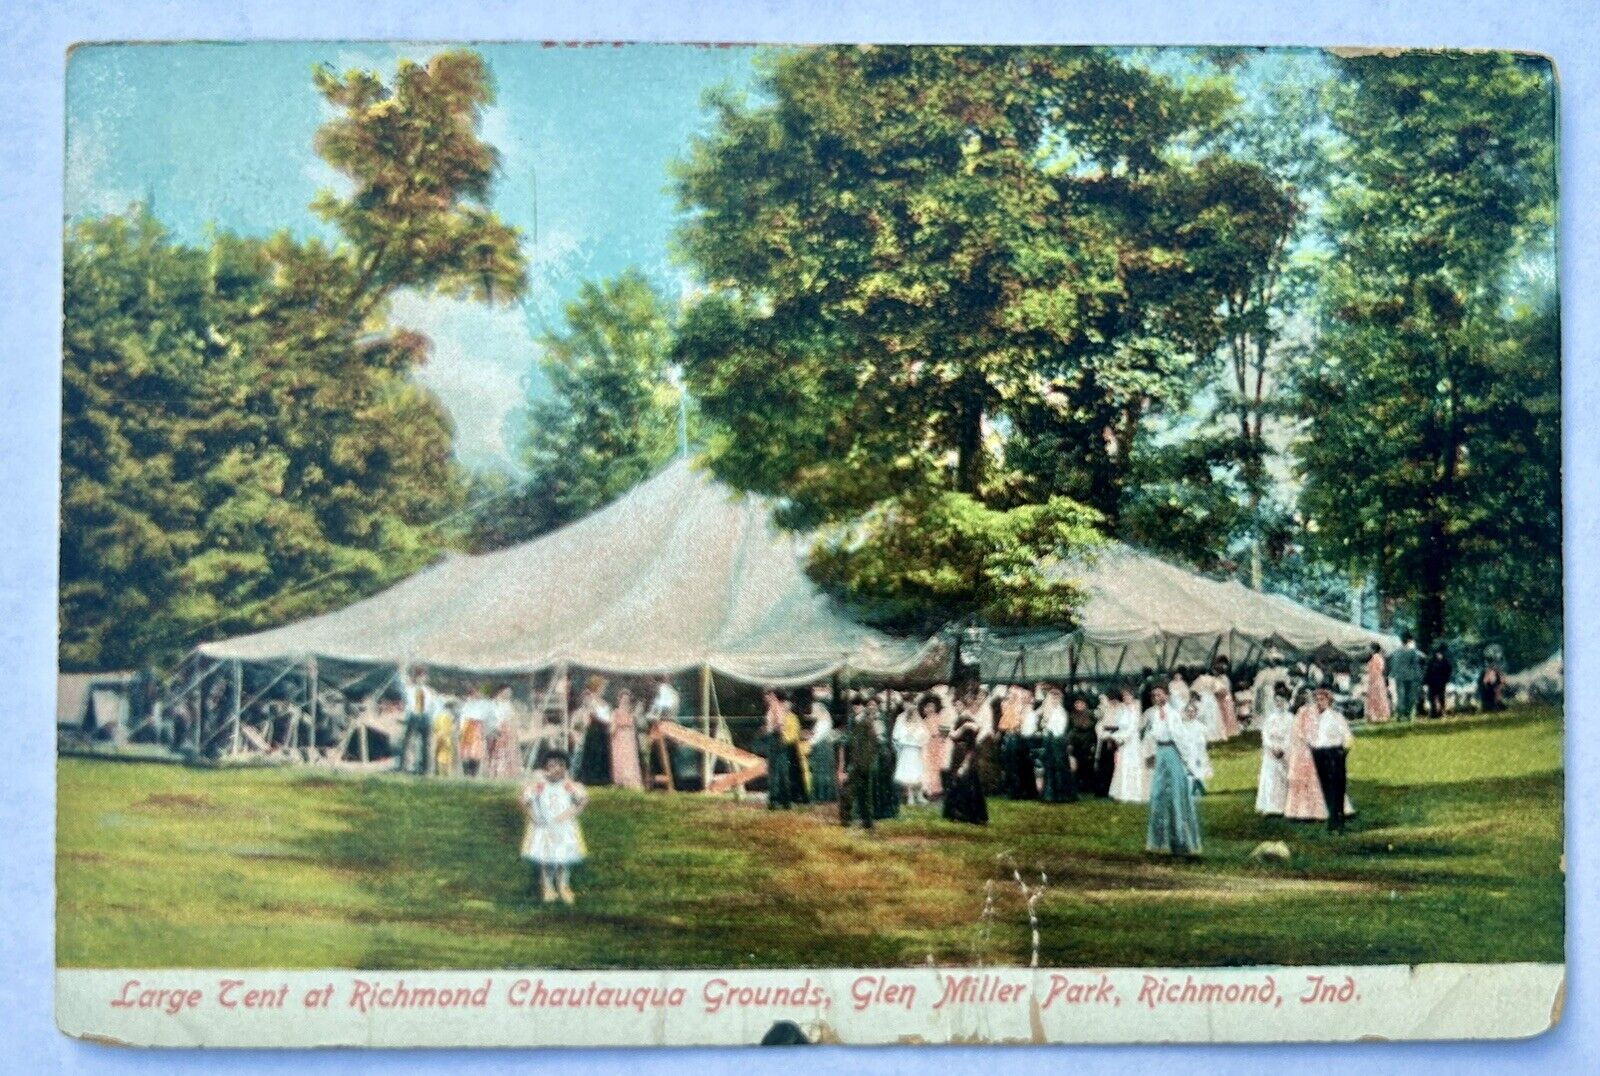 Richmond Chautauqua Grounds. Glen Miller Park. Indiana. Vintage Postcard